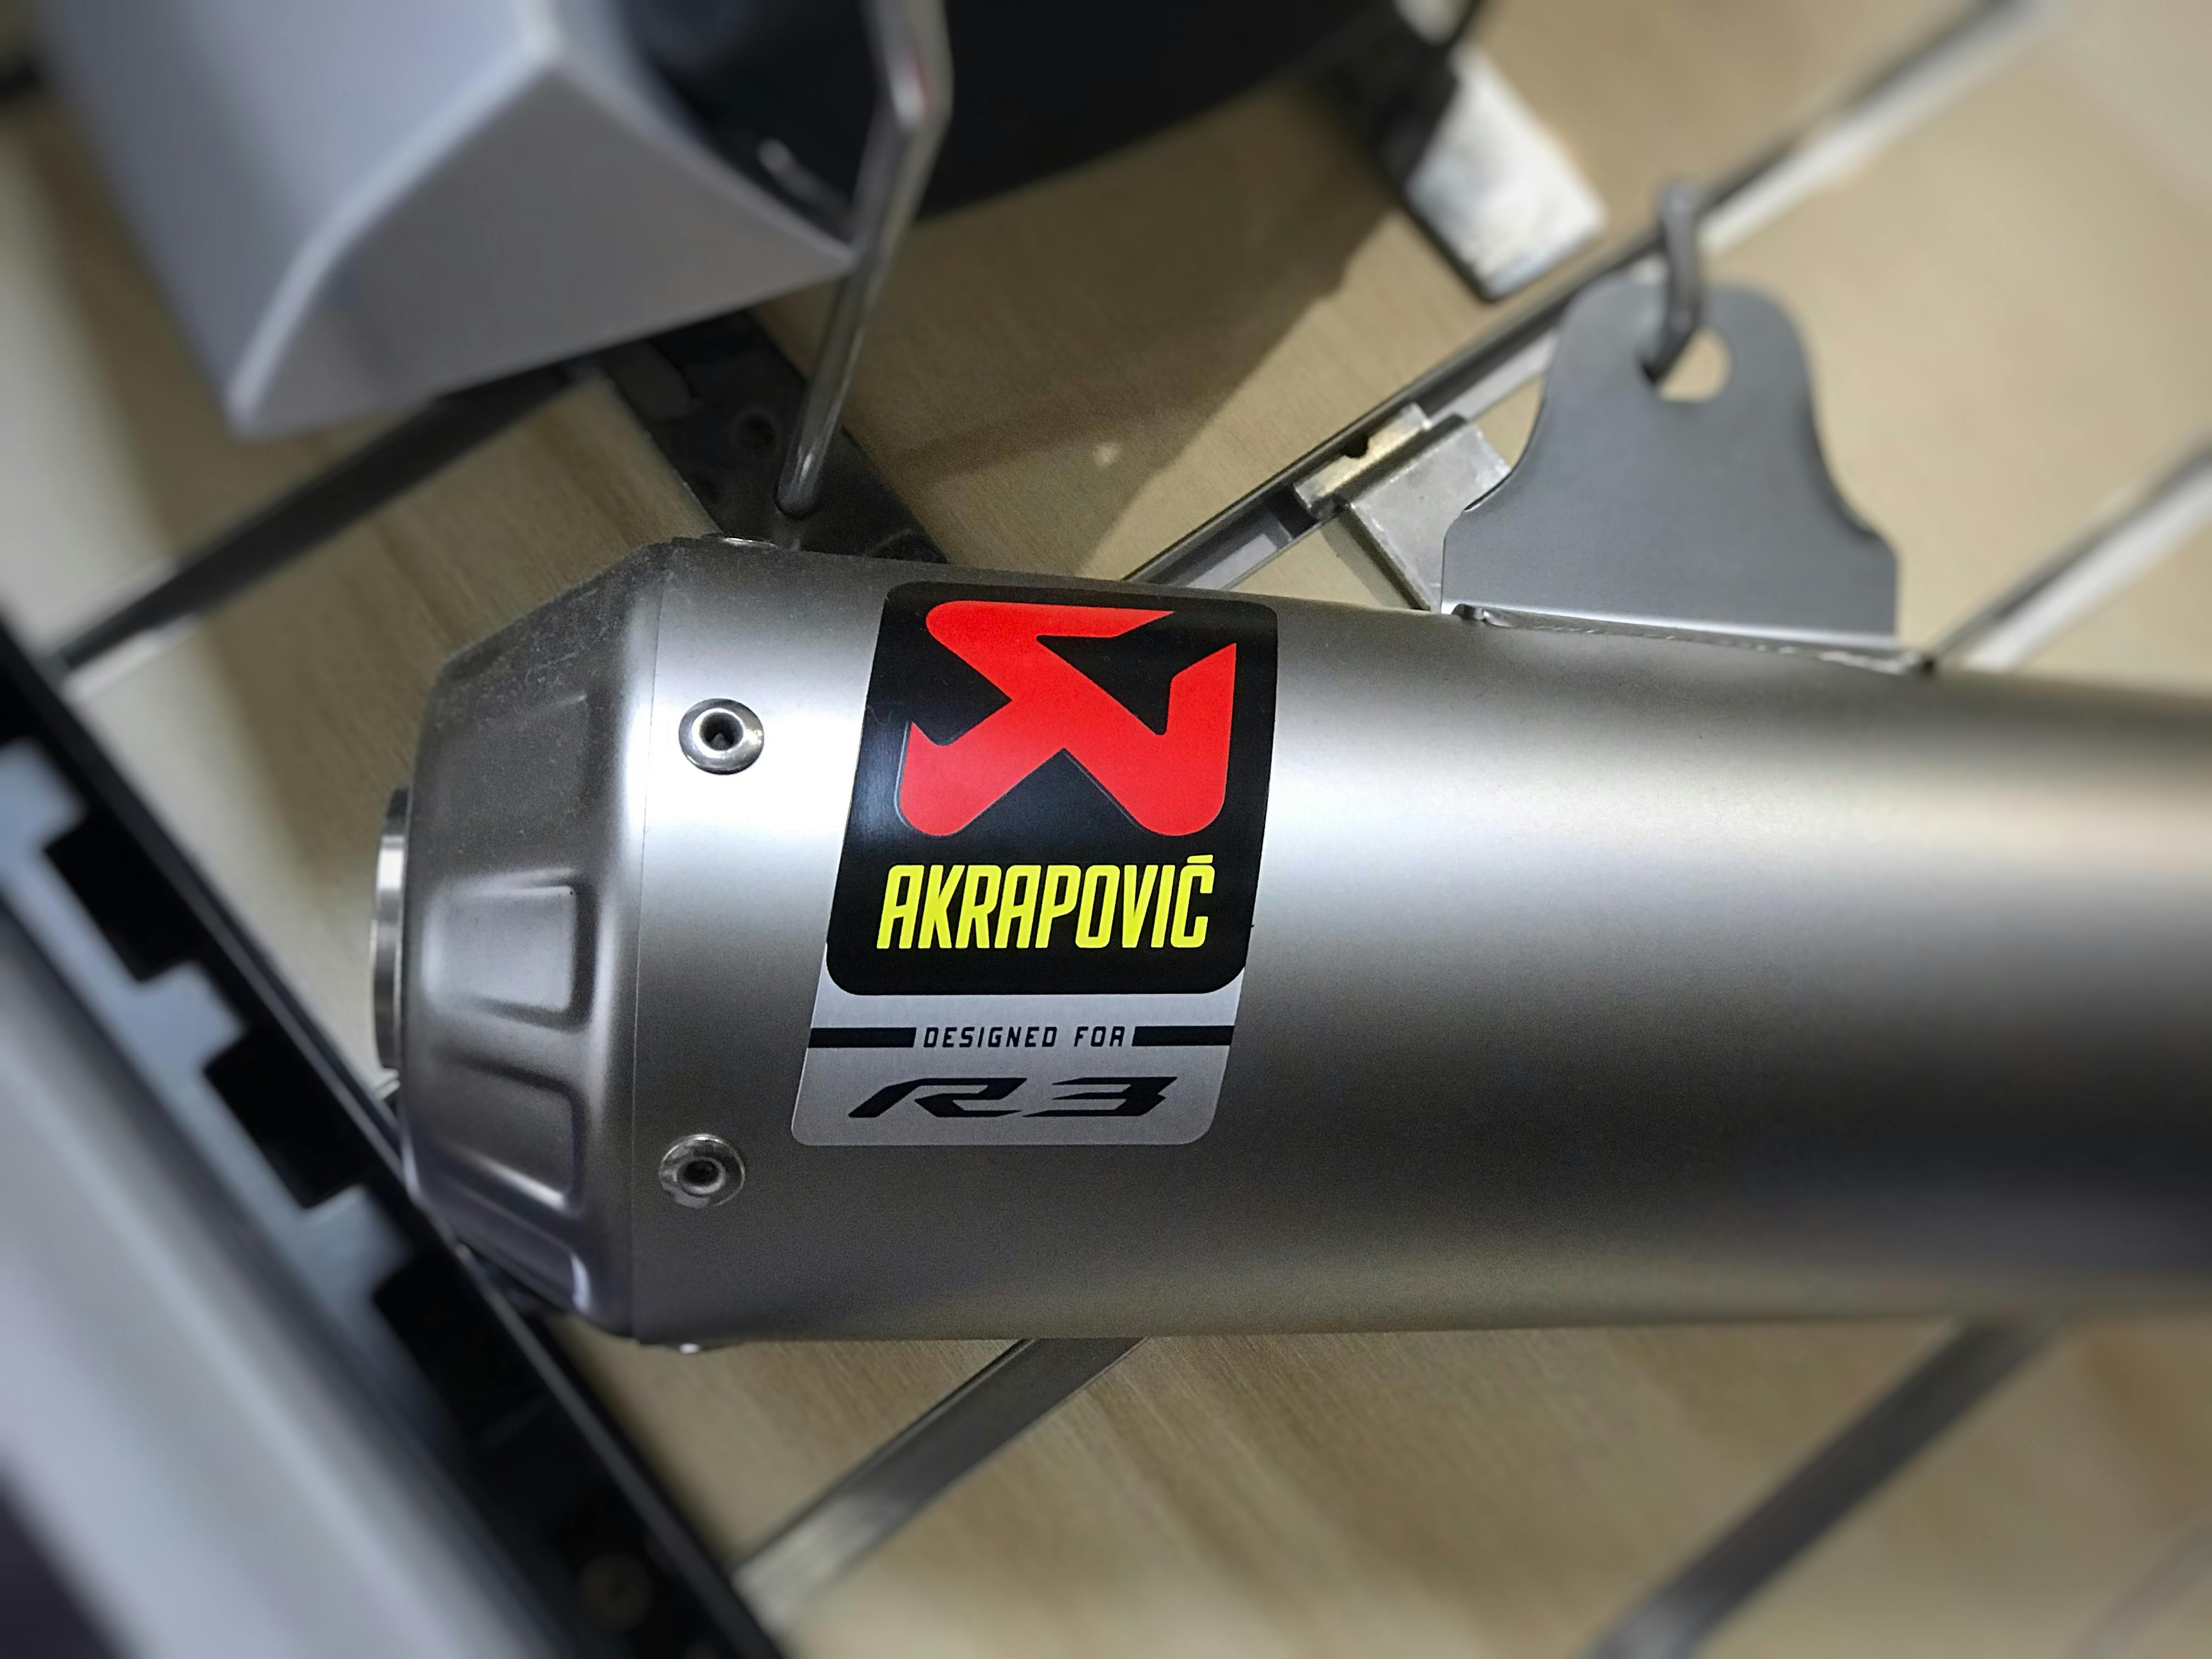 Genuine Akrapovic exhaust for Yamaha R3 from Yamaha Australia